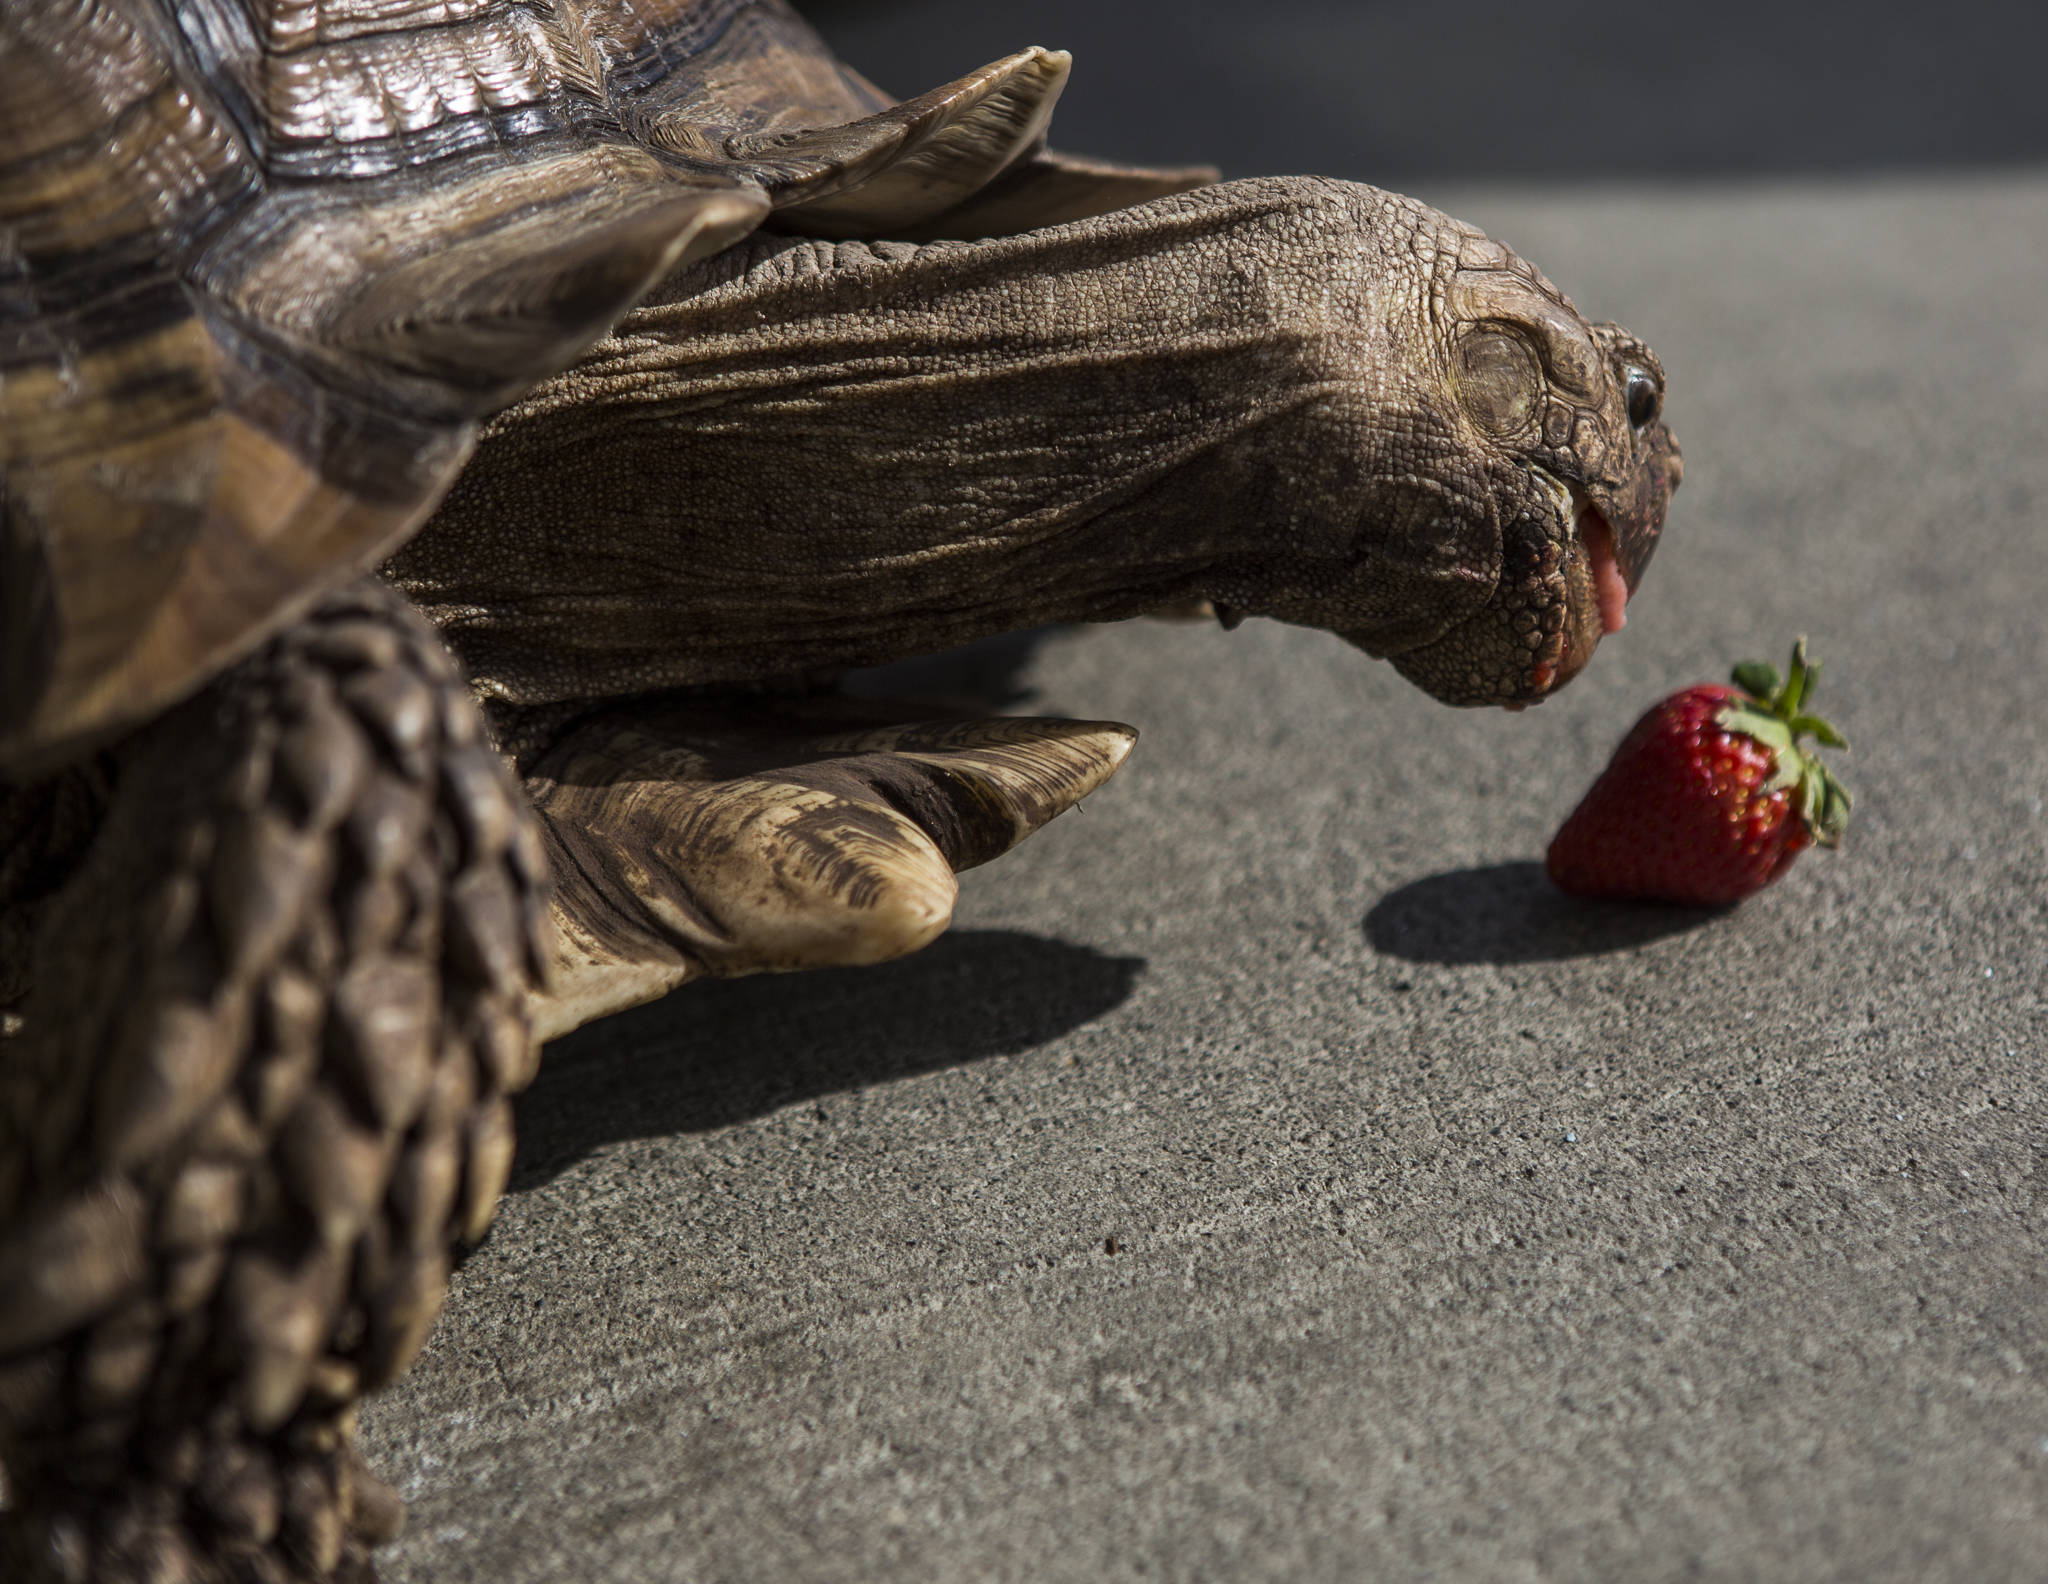 Raja enjoys a strawberry, his favorite treat. (Olivia Vanni / The Herald)